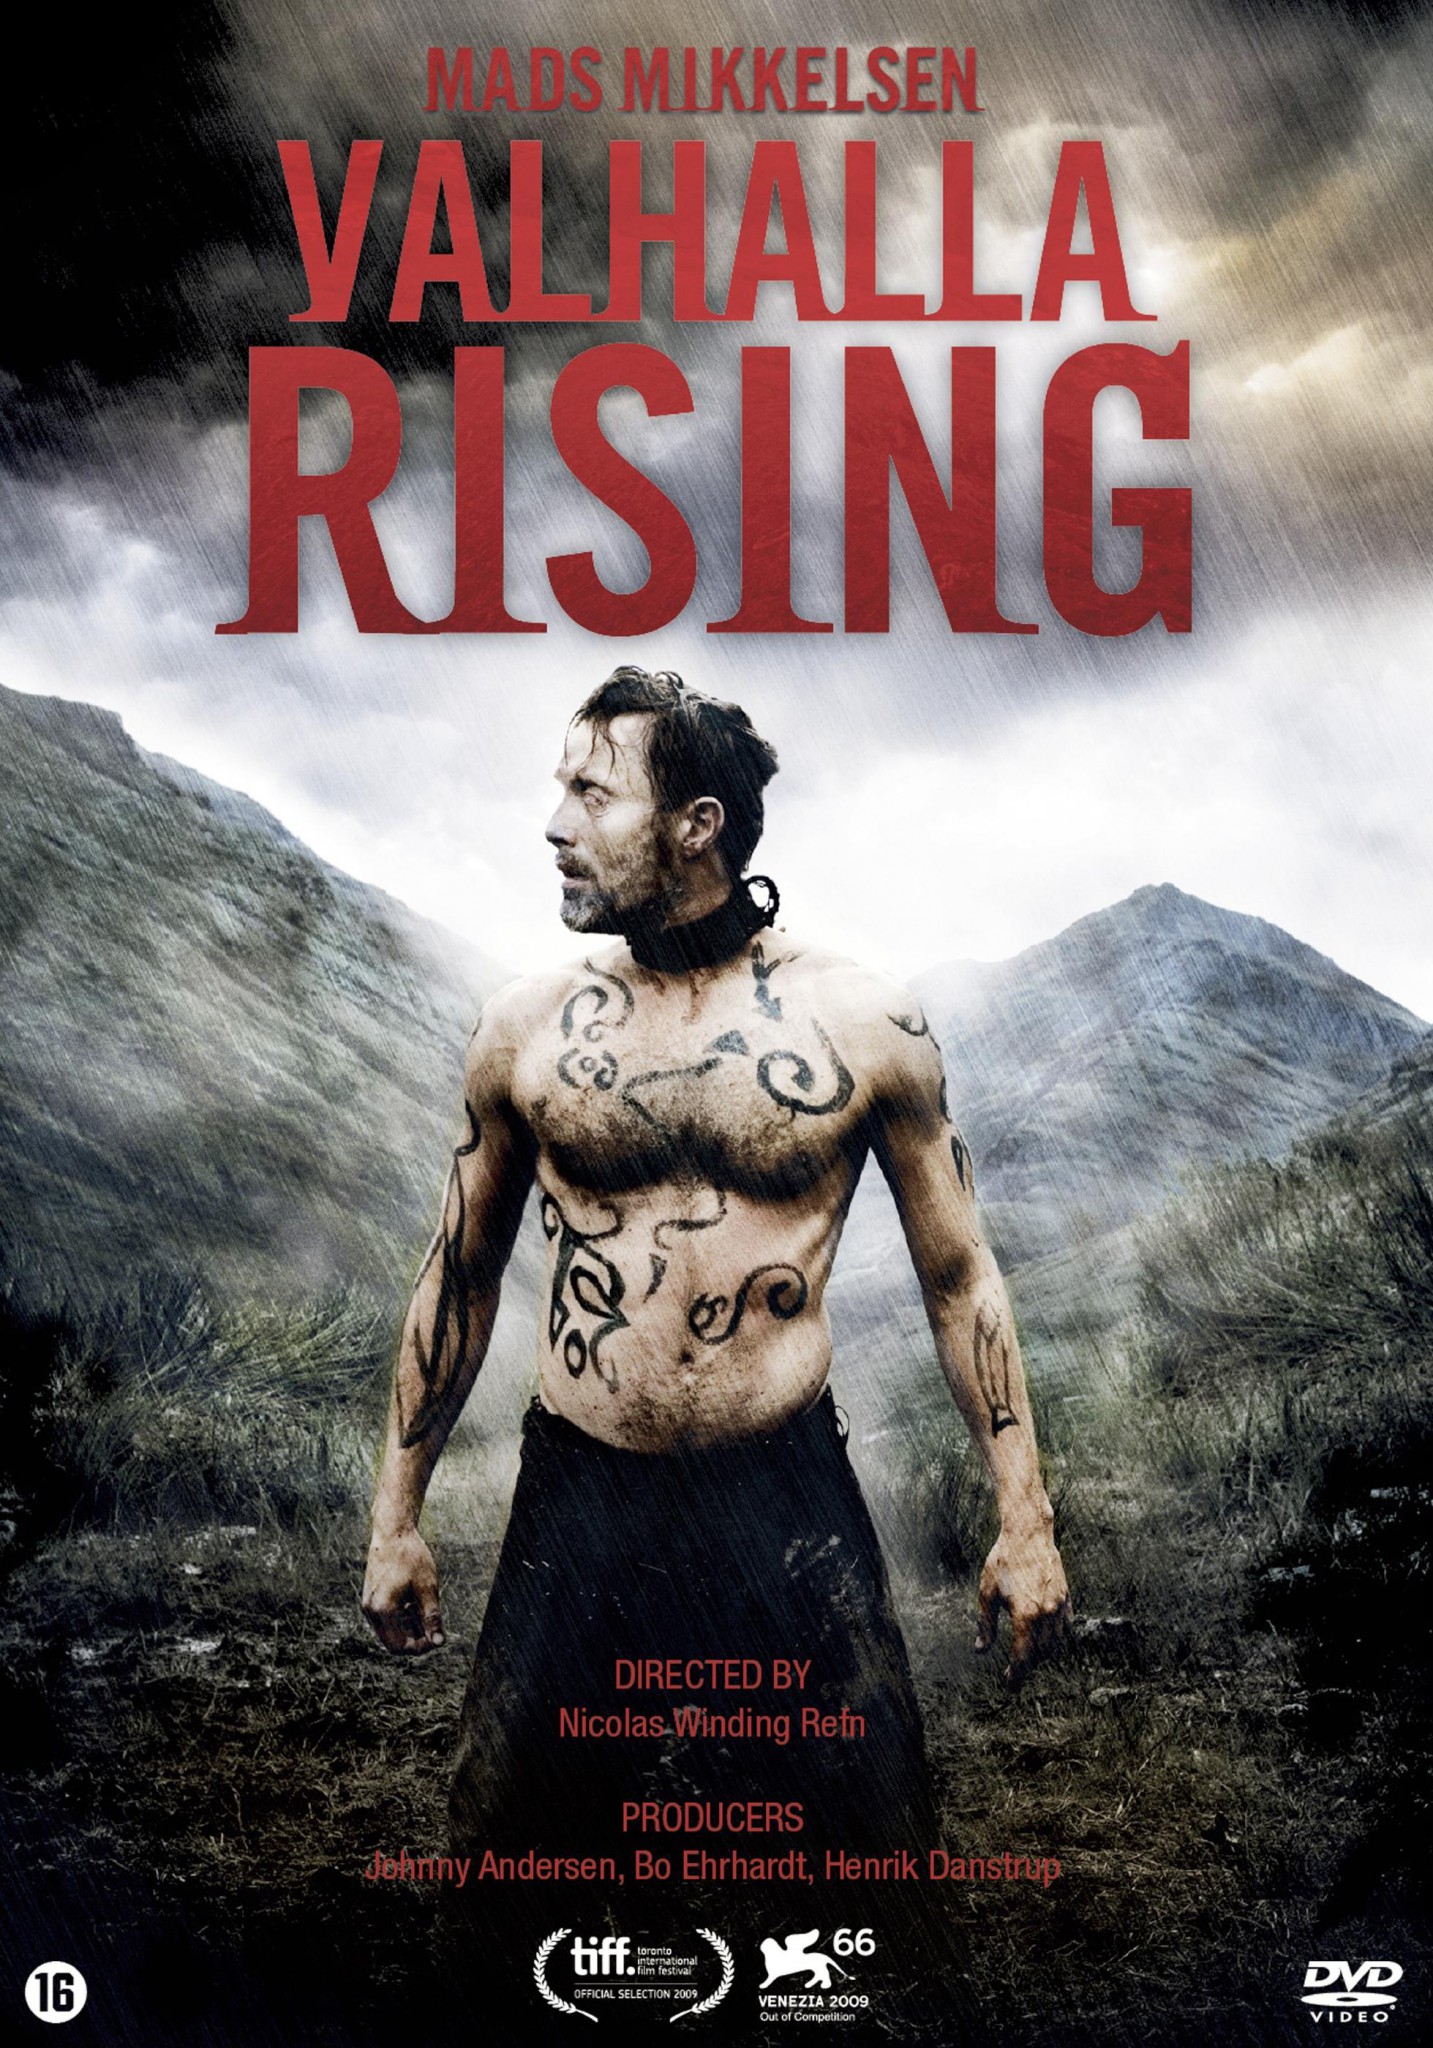  Valhalla Rising 2010 Filmn rdens Hj rne